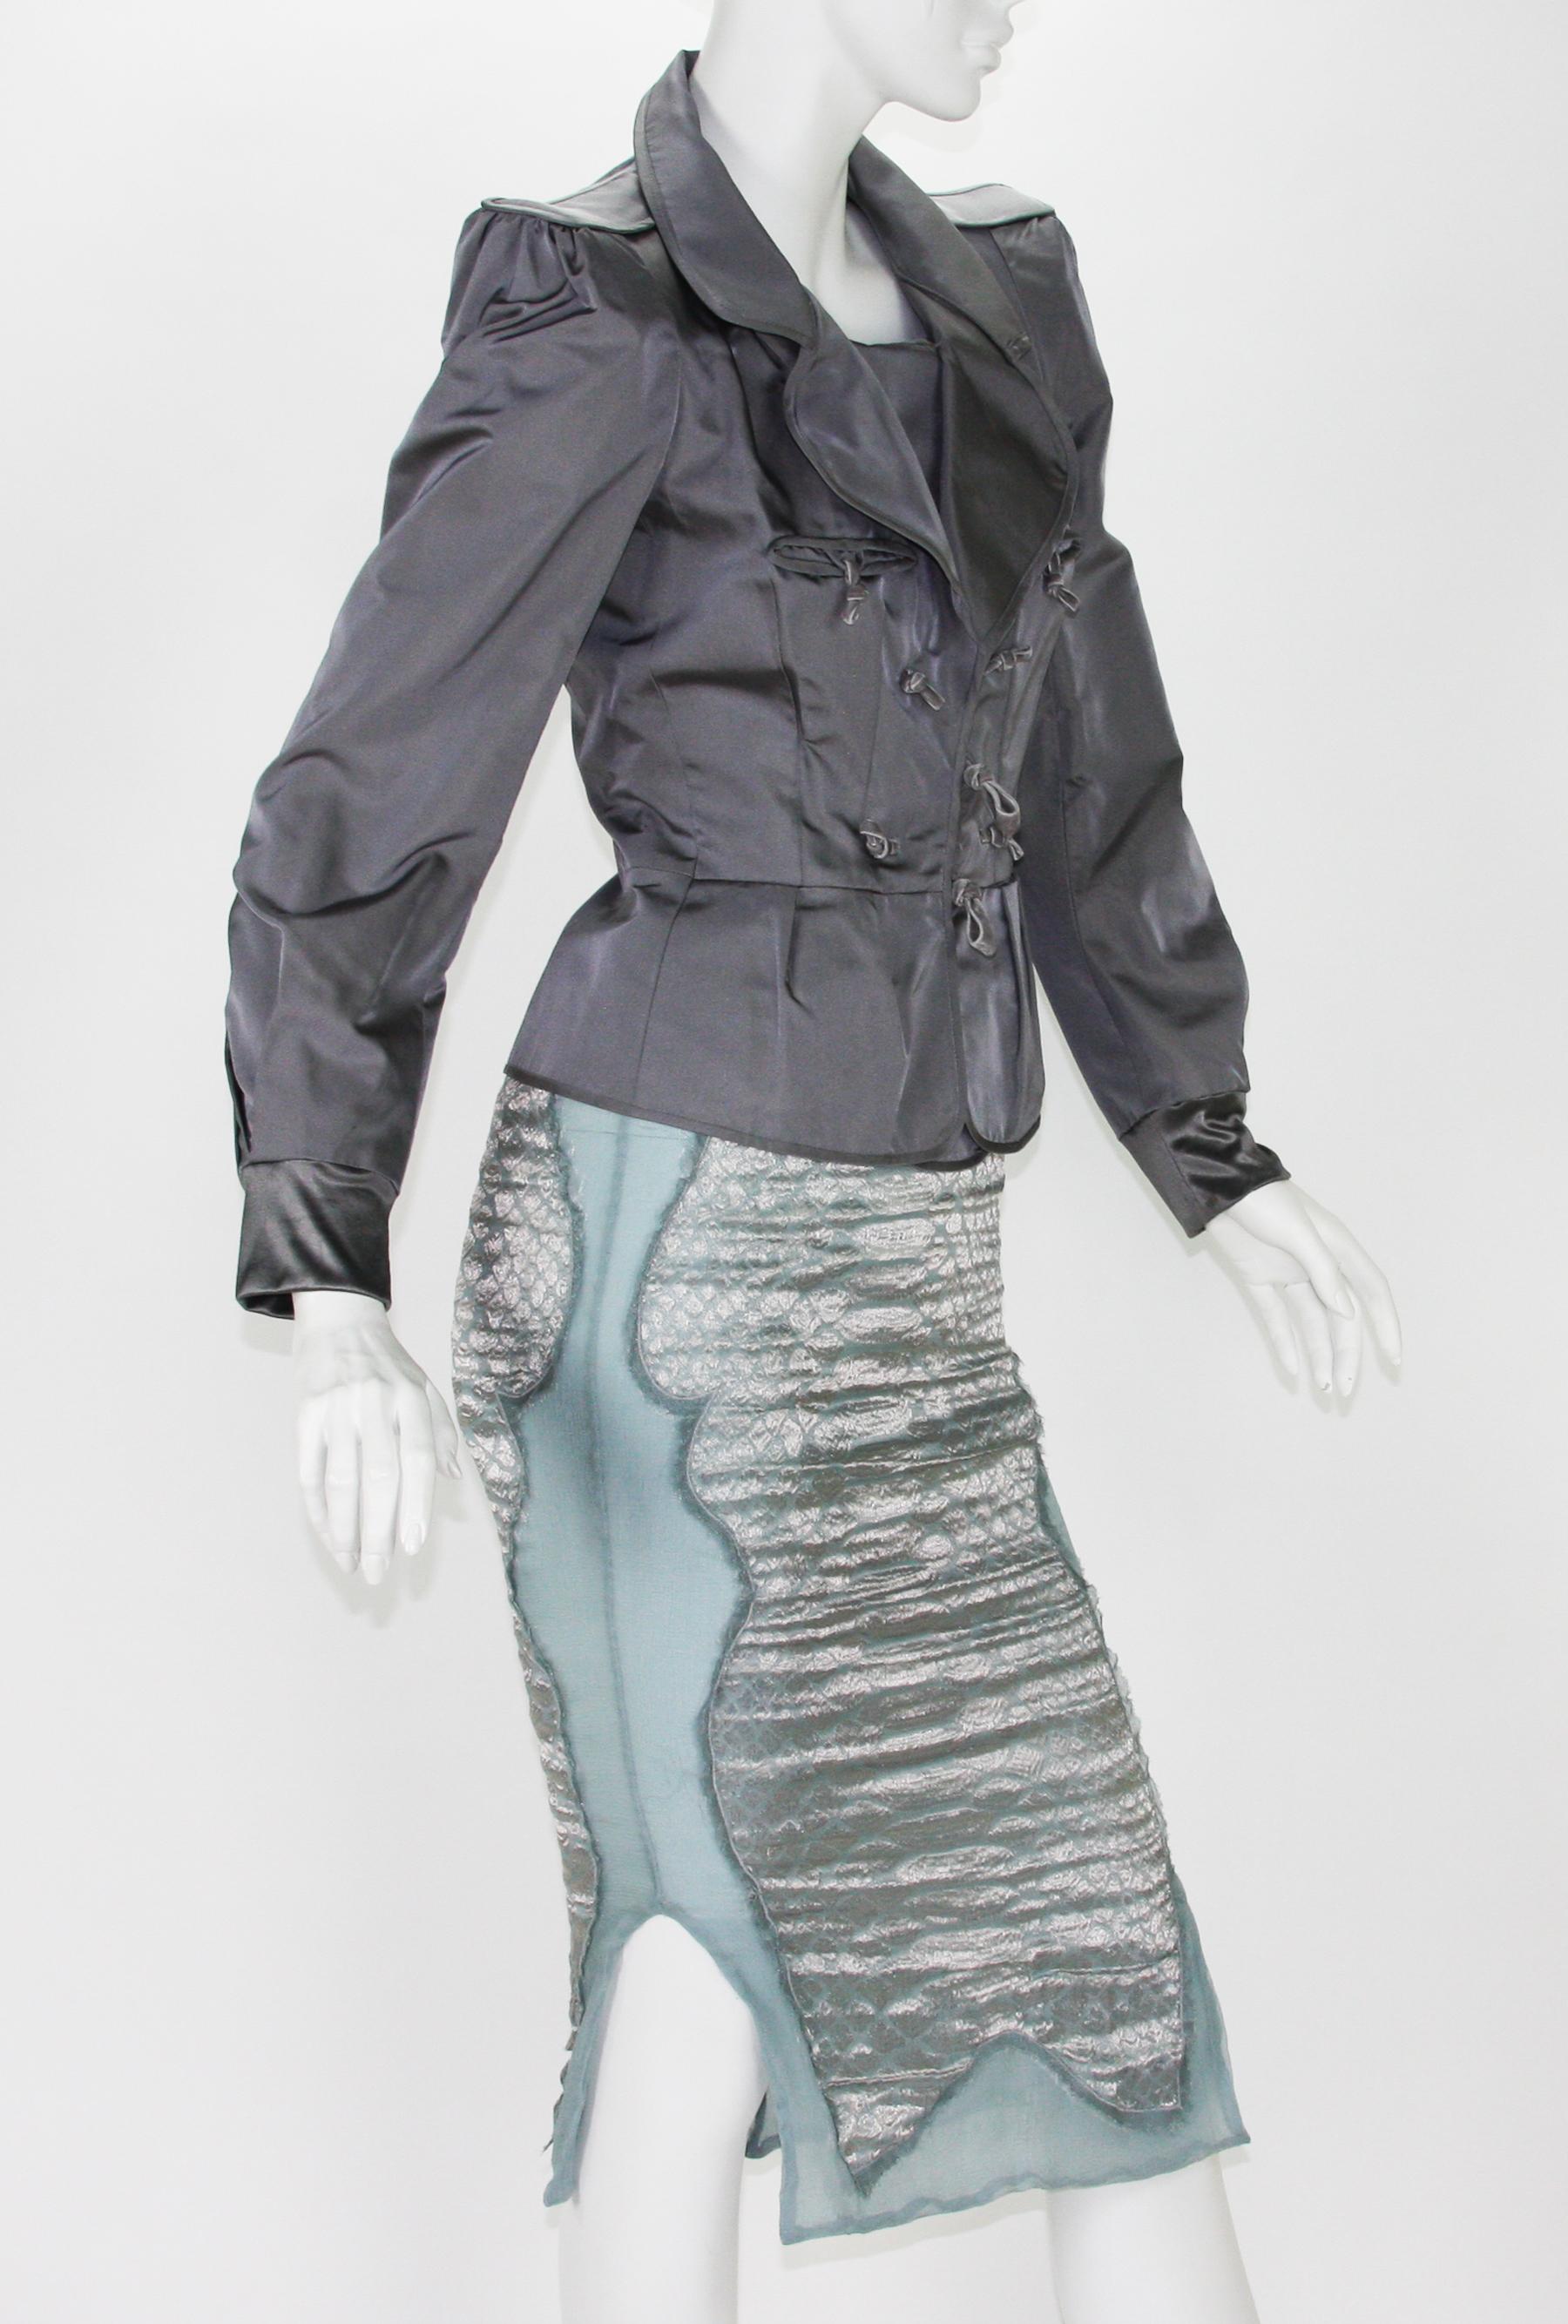 Women's Tom Ford for Yves Saint Laurent F/W 2004 Silk Pagoda Jacket Skirt Suit Fr 38 - 6 For Sale